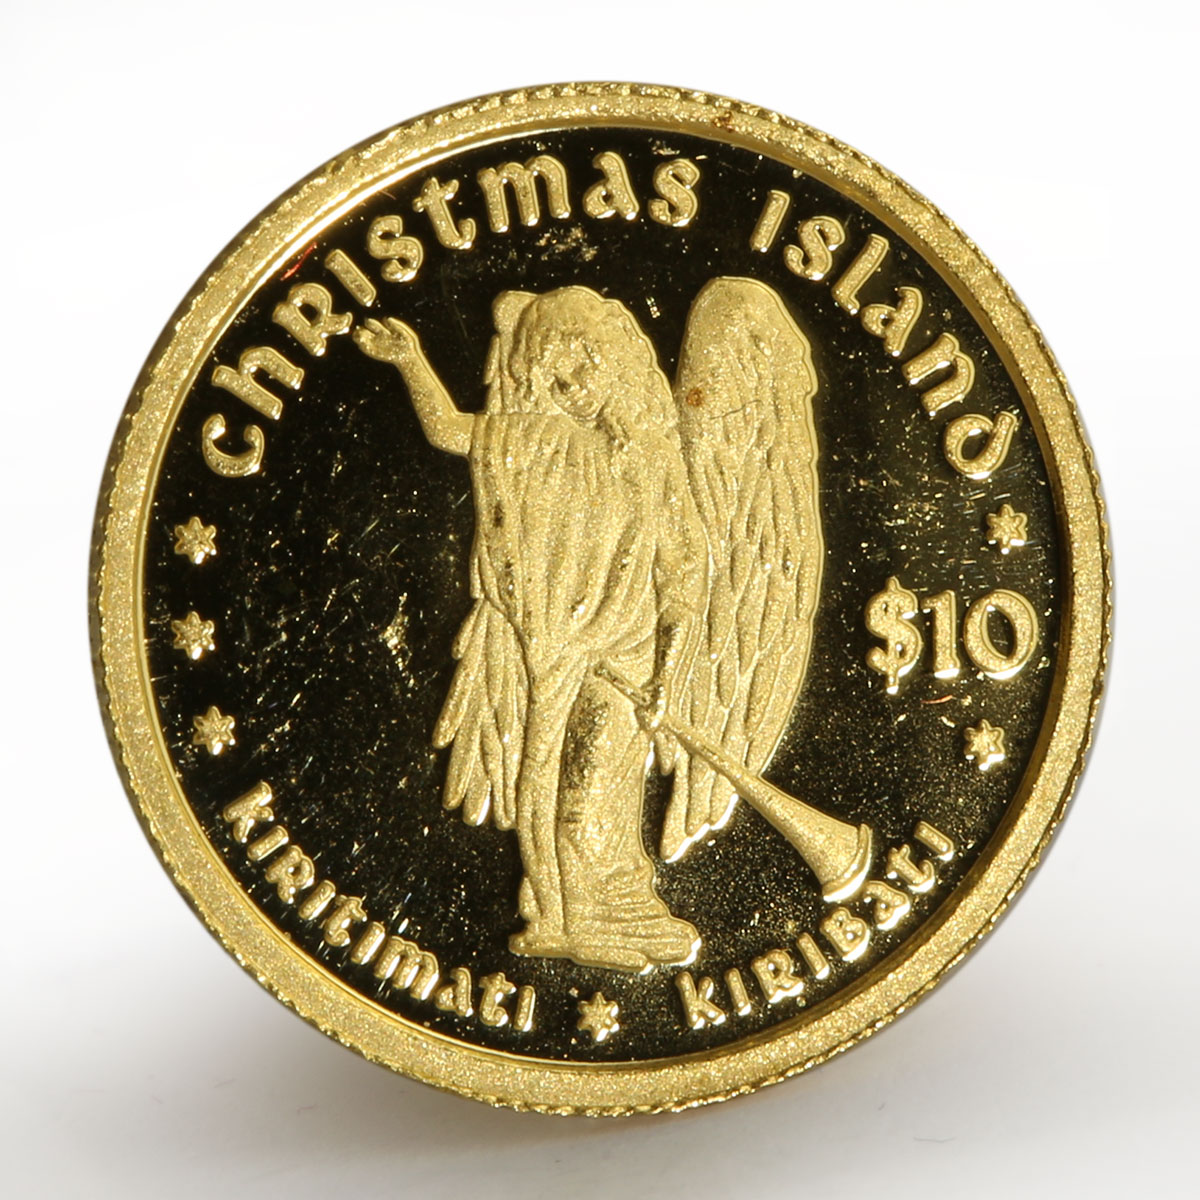 Kiribati 10 dollars Christmas Island Shield Angel gold coin 2005